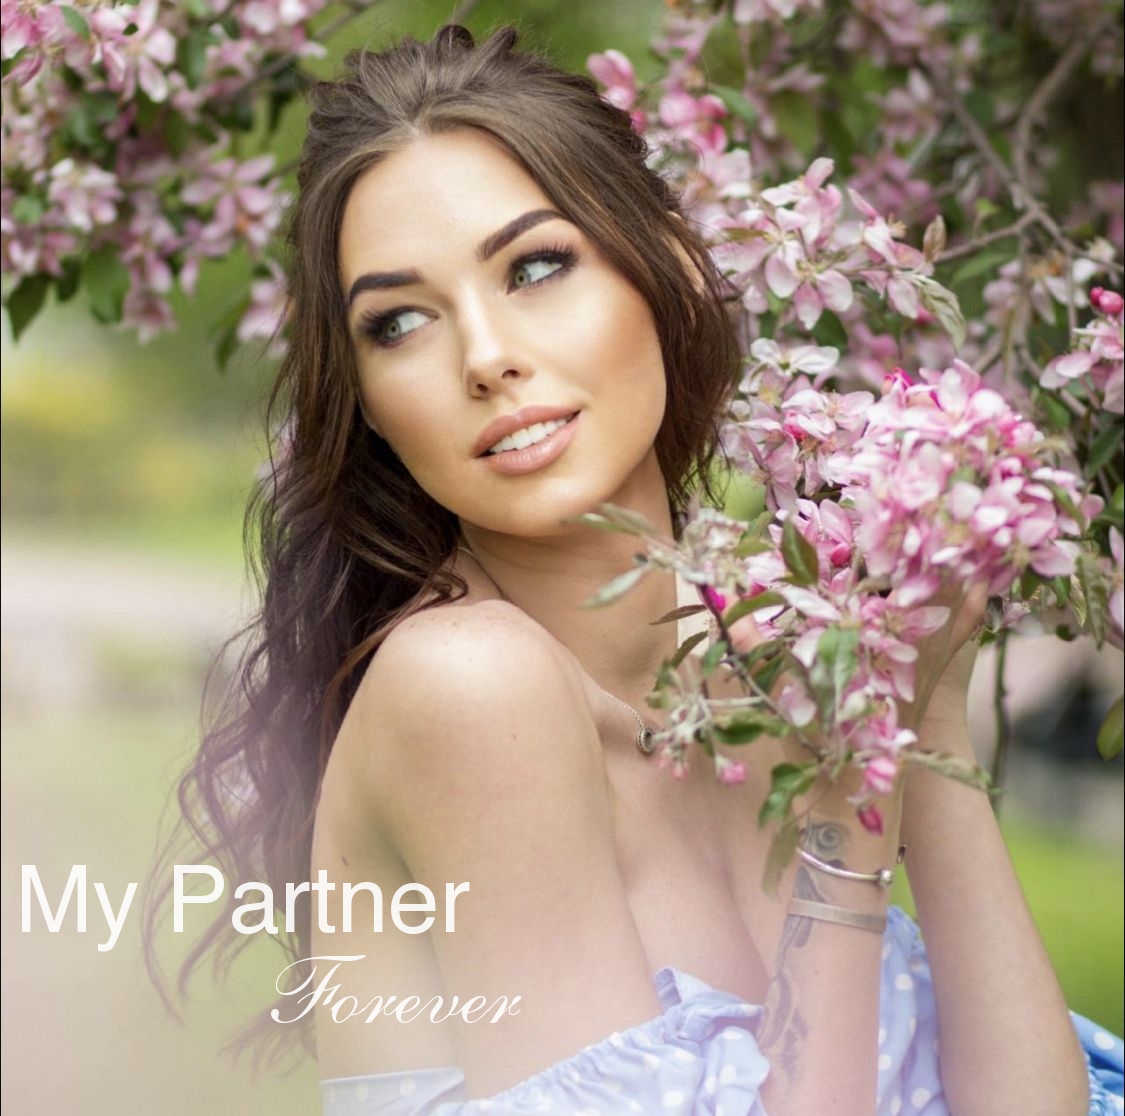 Dating Site to Meet Stunning Ukrainian Lady Alina from Kiev, Ukraine